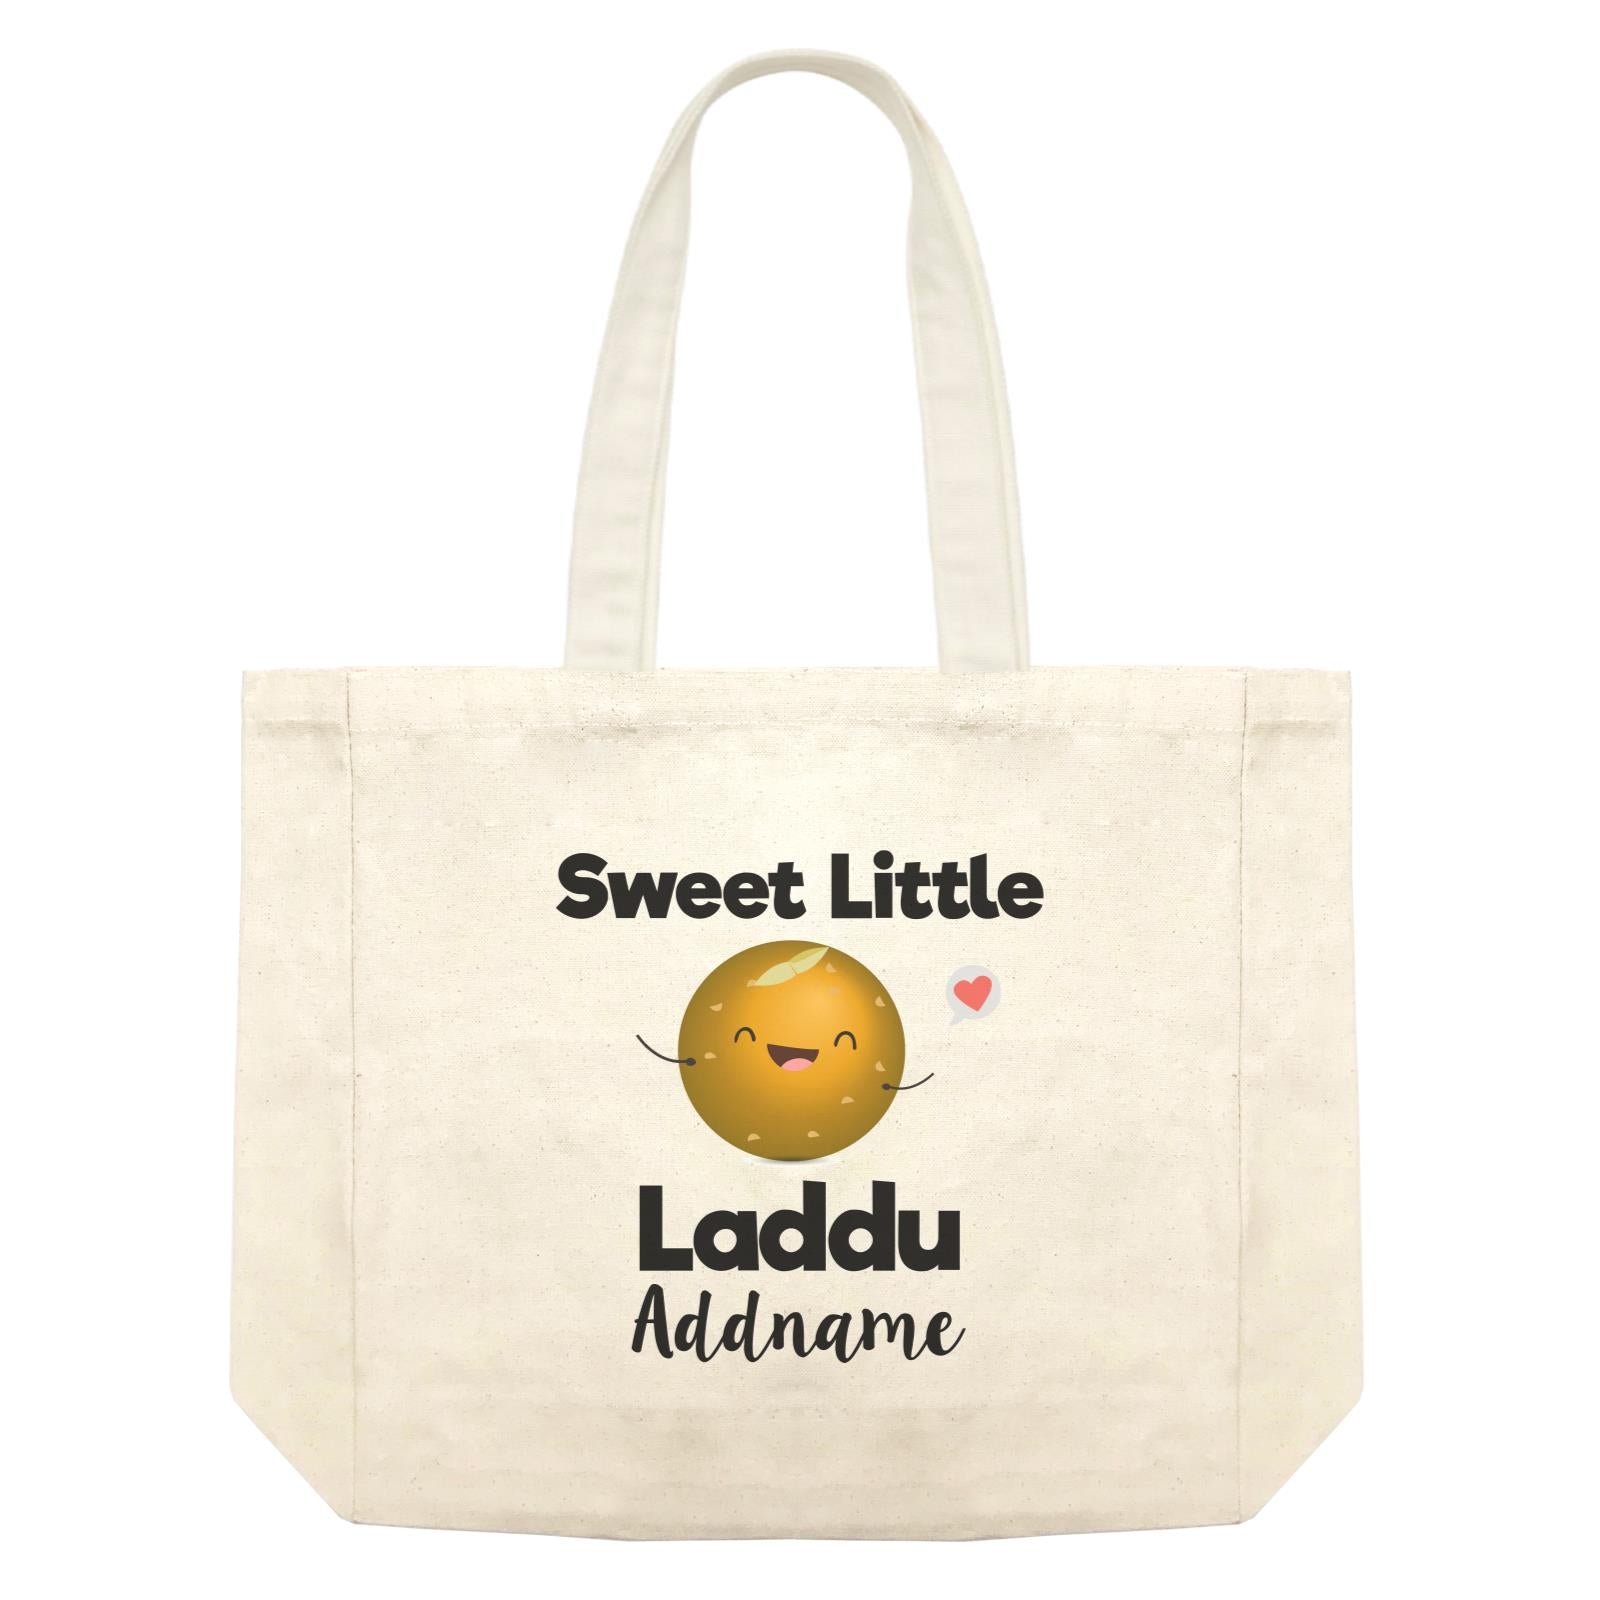 Sweet Little Laddu Addname Shopping Bag